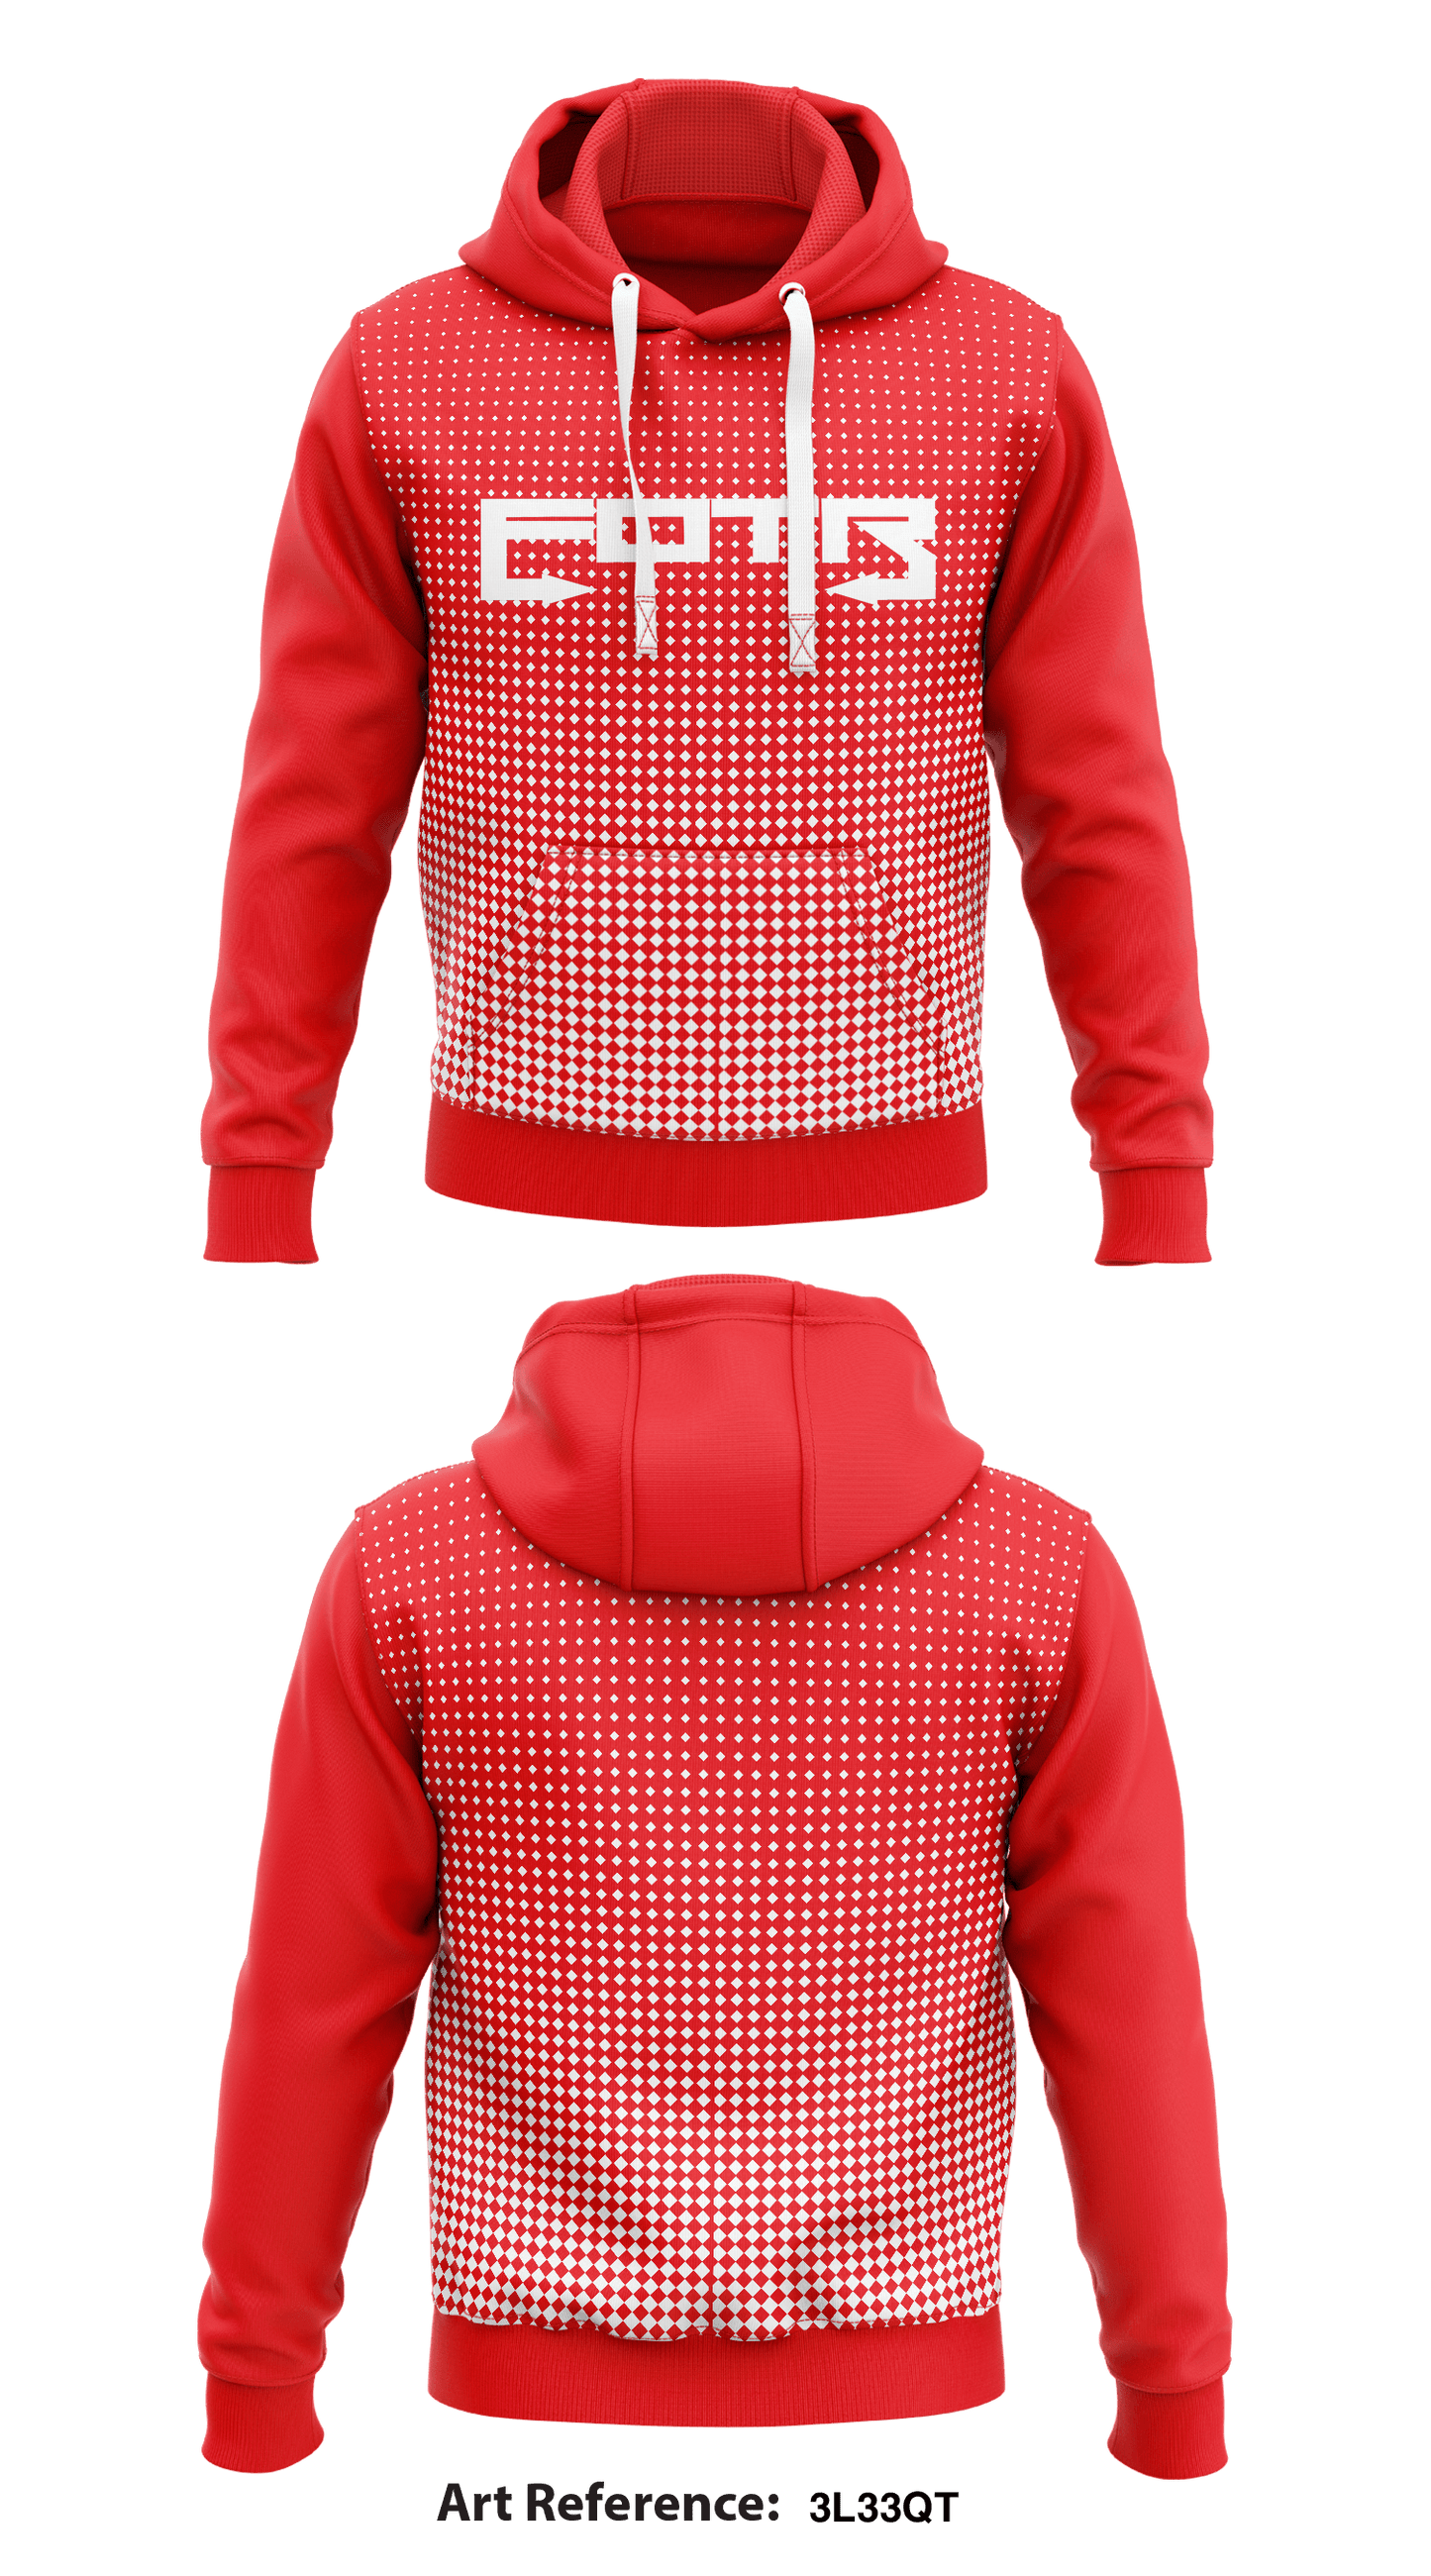 Future of the Retro Store 1 Core Men's Hooded Performance Sweatshirt - 3L33qt